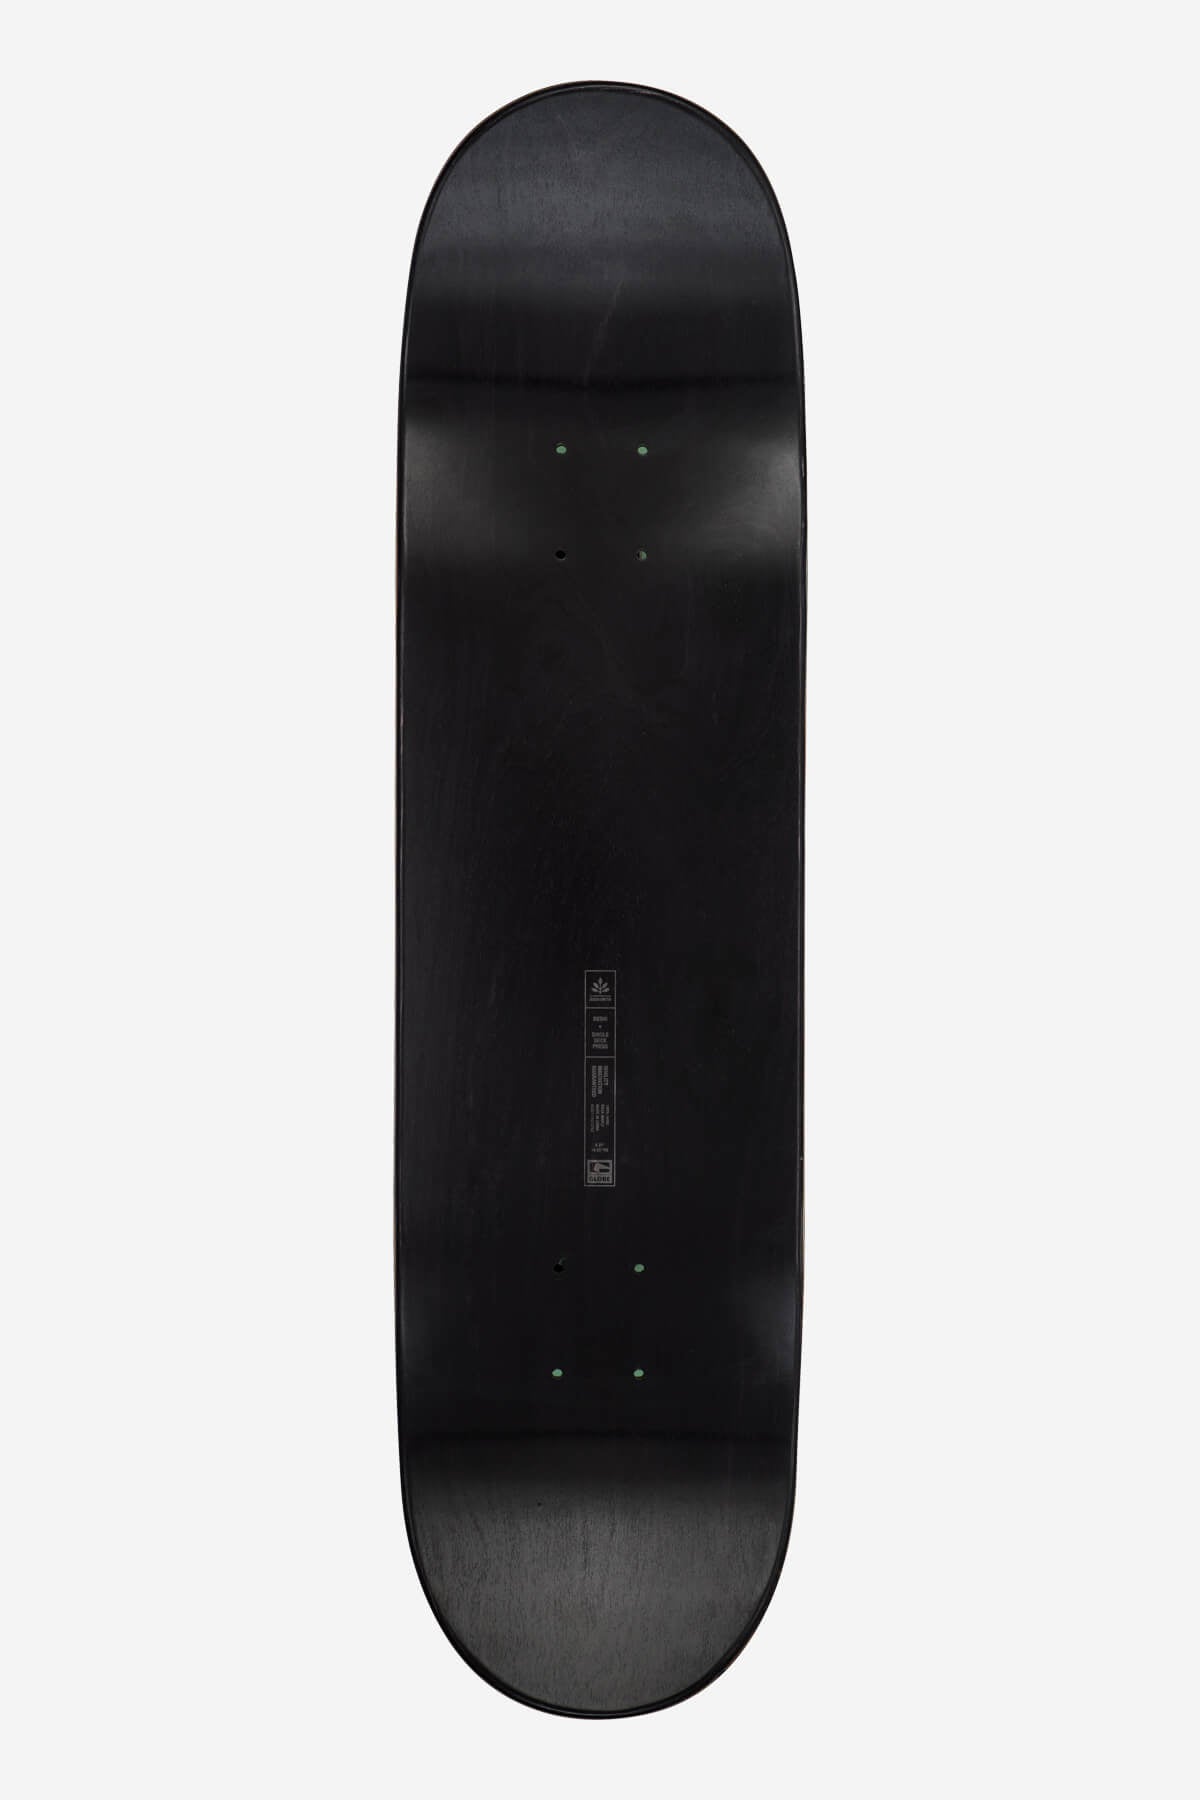 Globe - G1 Lineform 2 - Mint - 8.25". Skateboard Deck